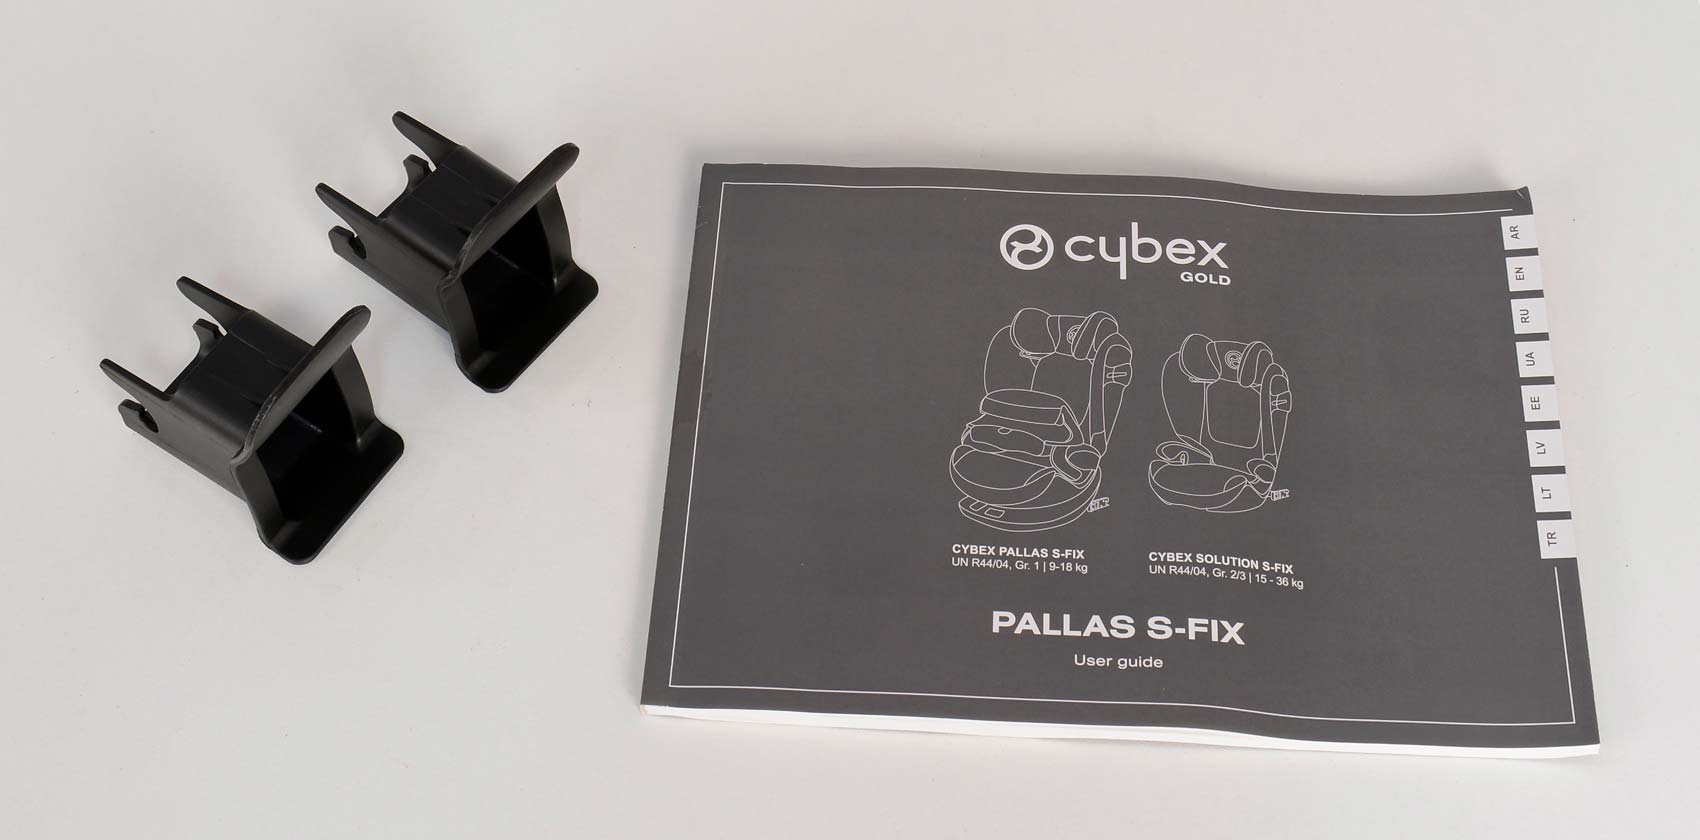 Cybex Pallas S-Fix